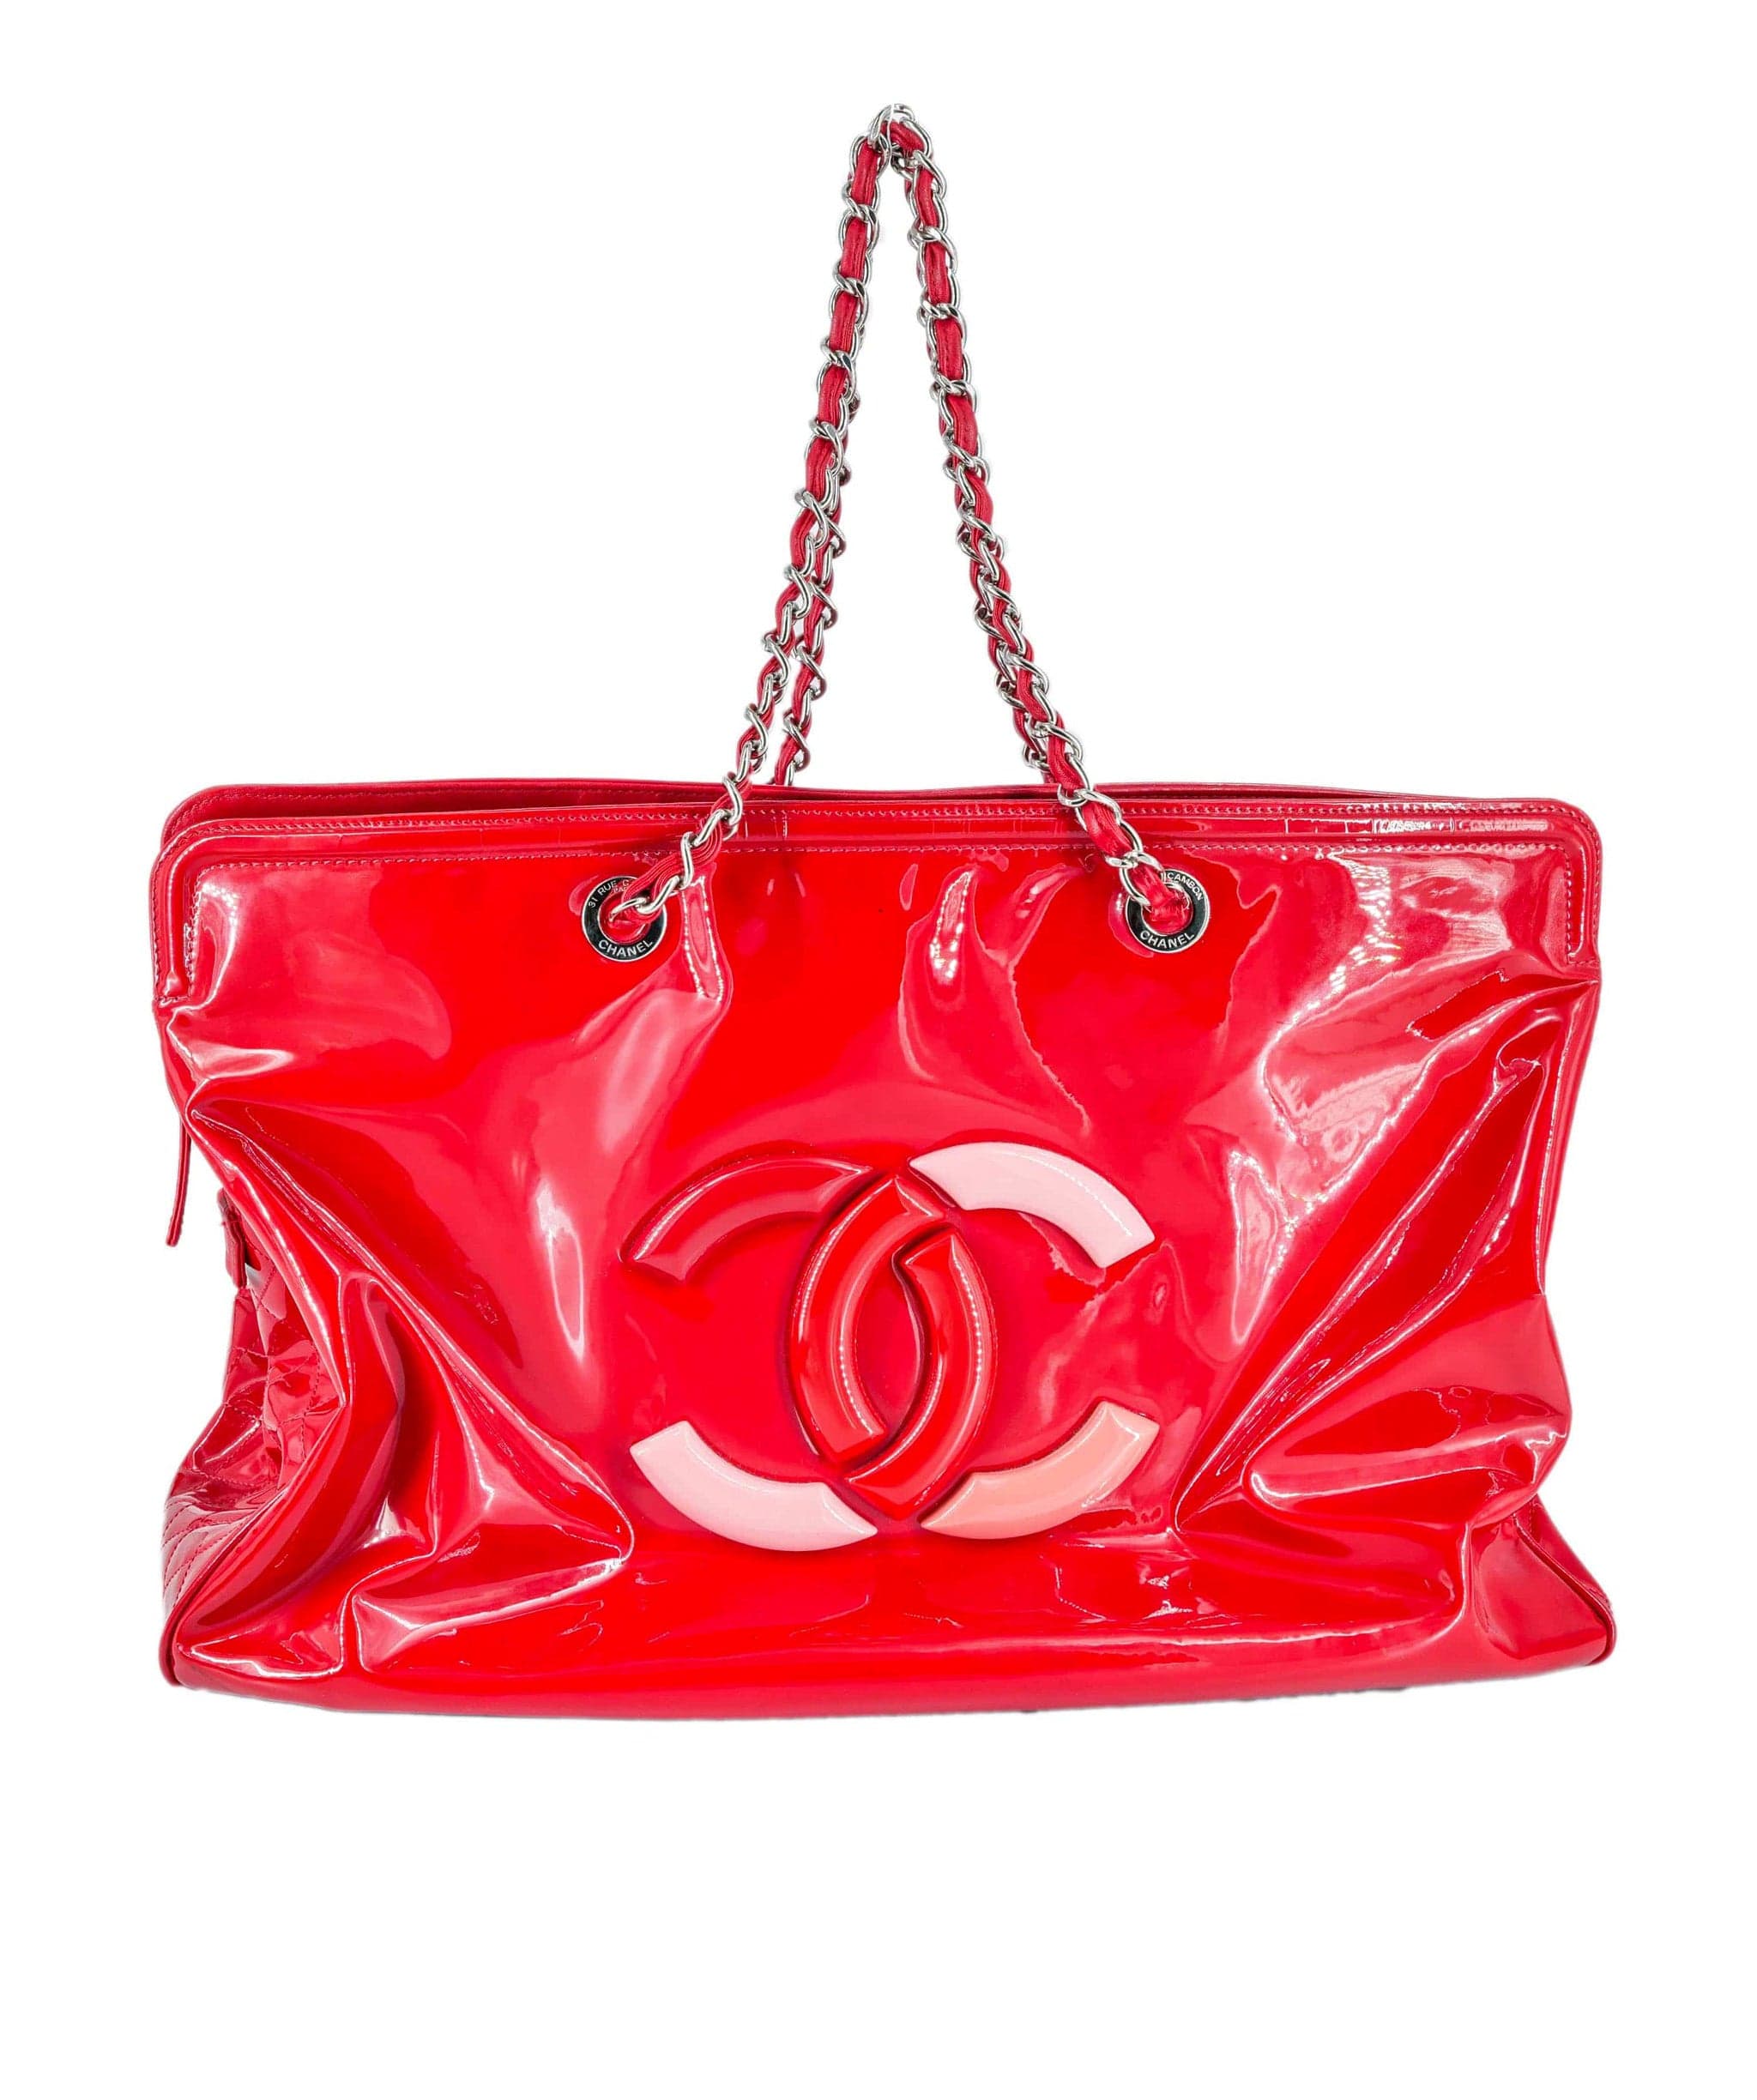 Chanel Red PVC Tote bag RJL1700